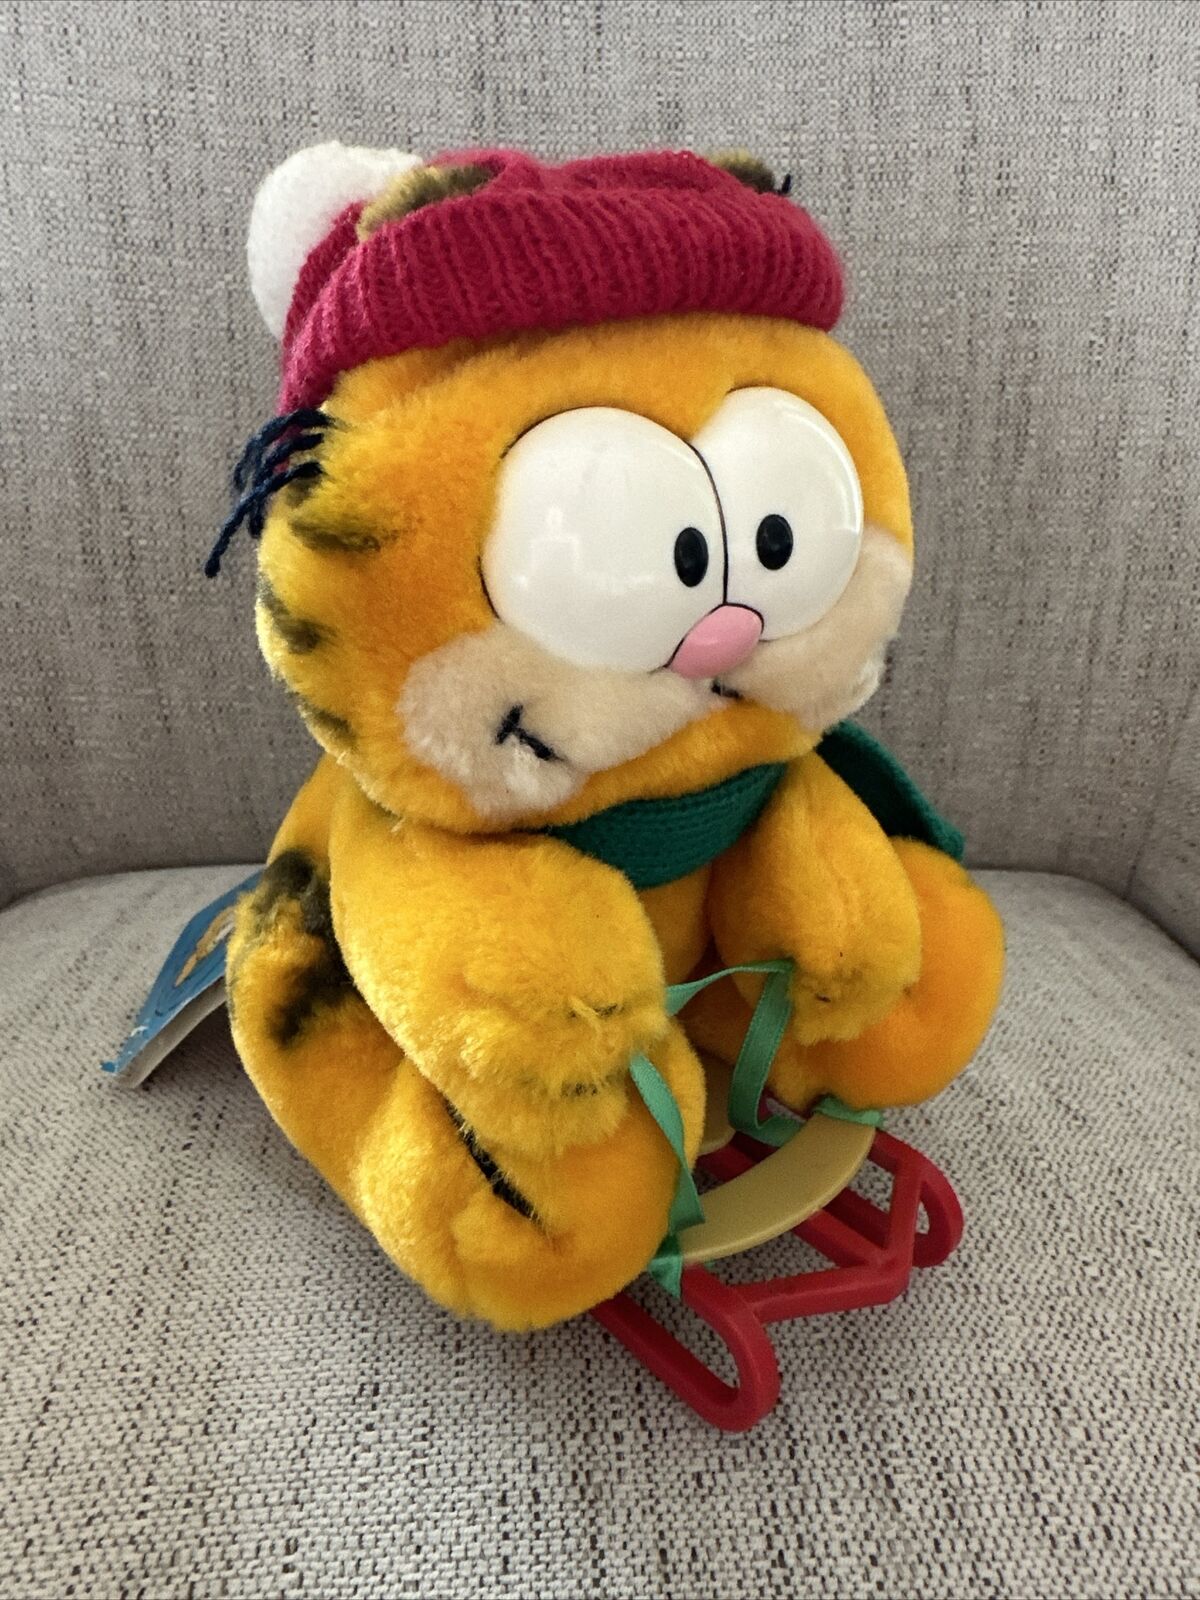 Vintage 1978 Holiday Garfield Takes The Mountain Stuffed Animal Toy Stuffed